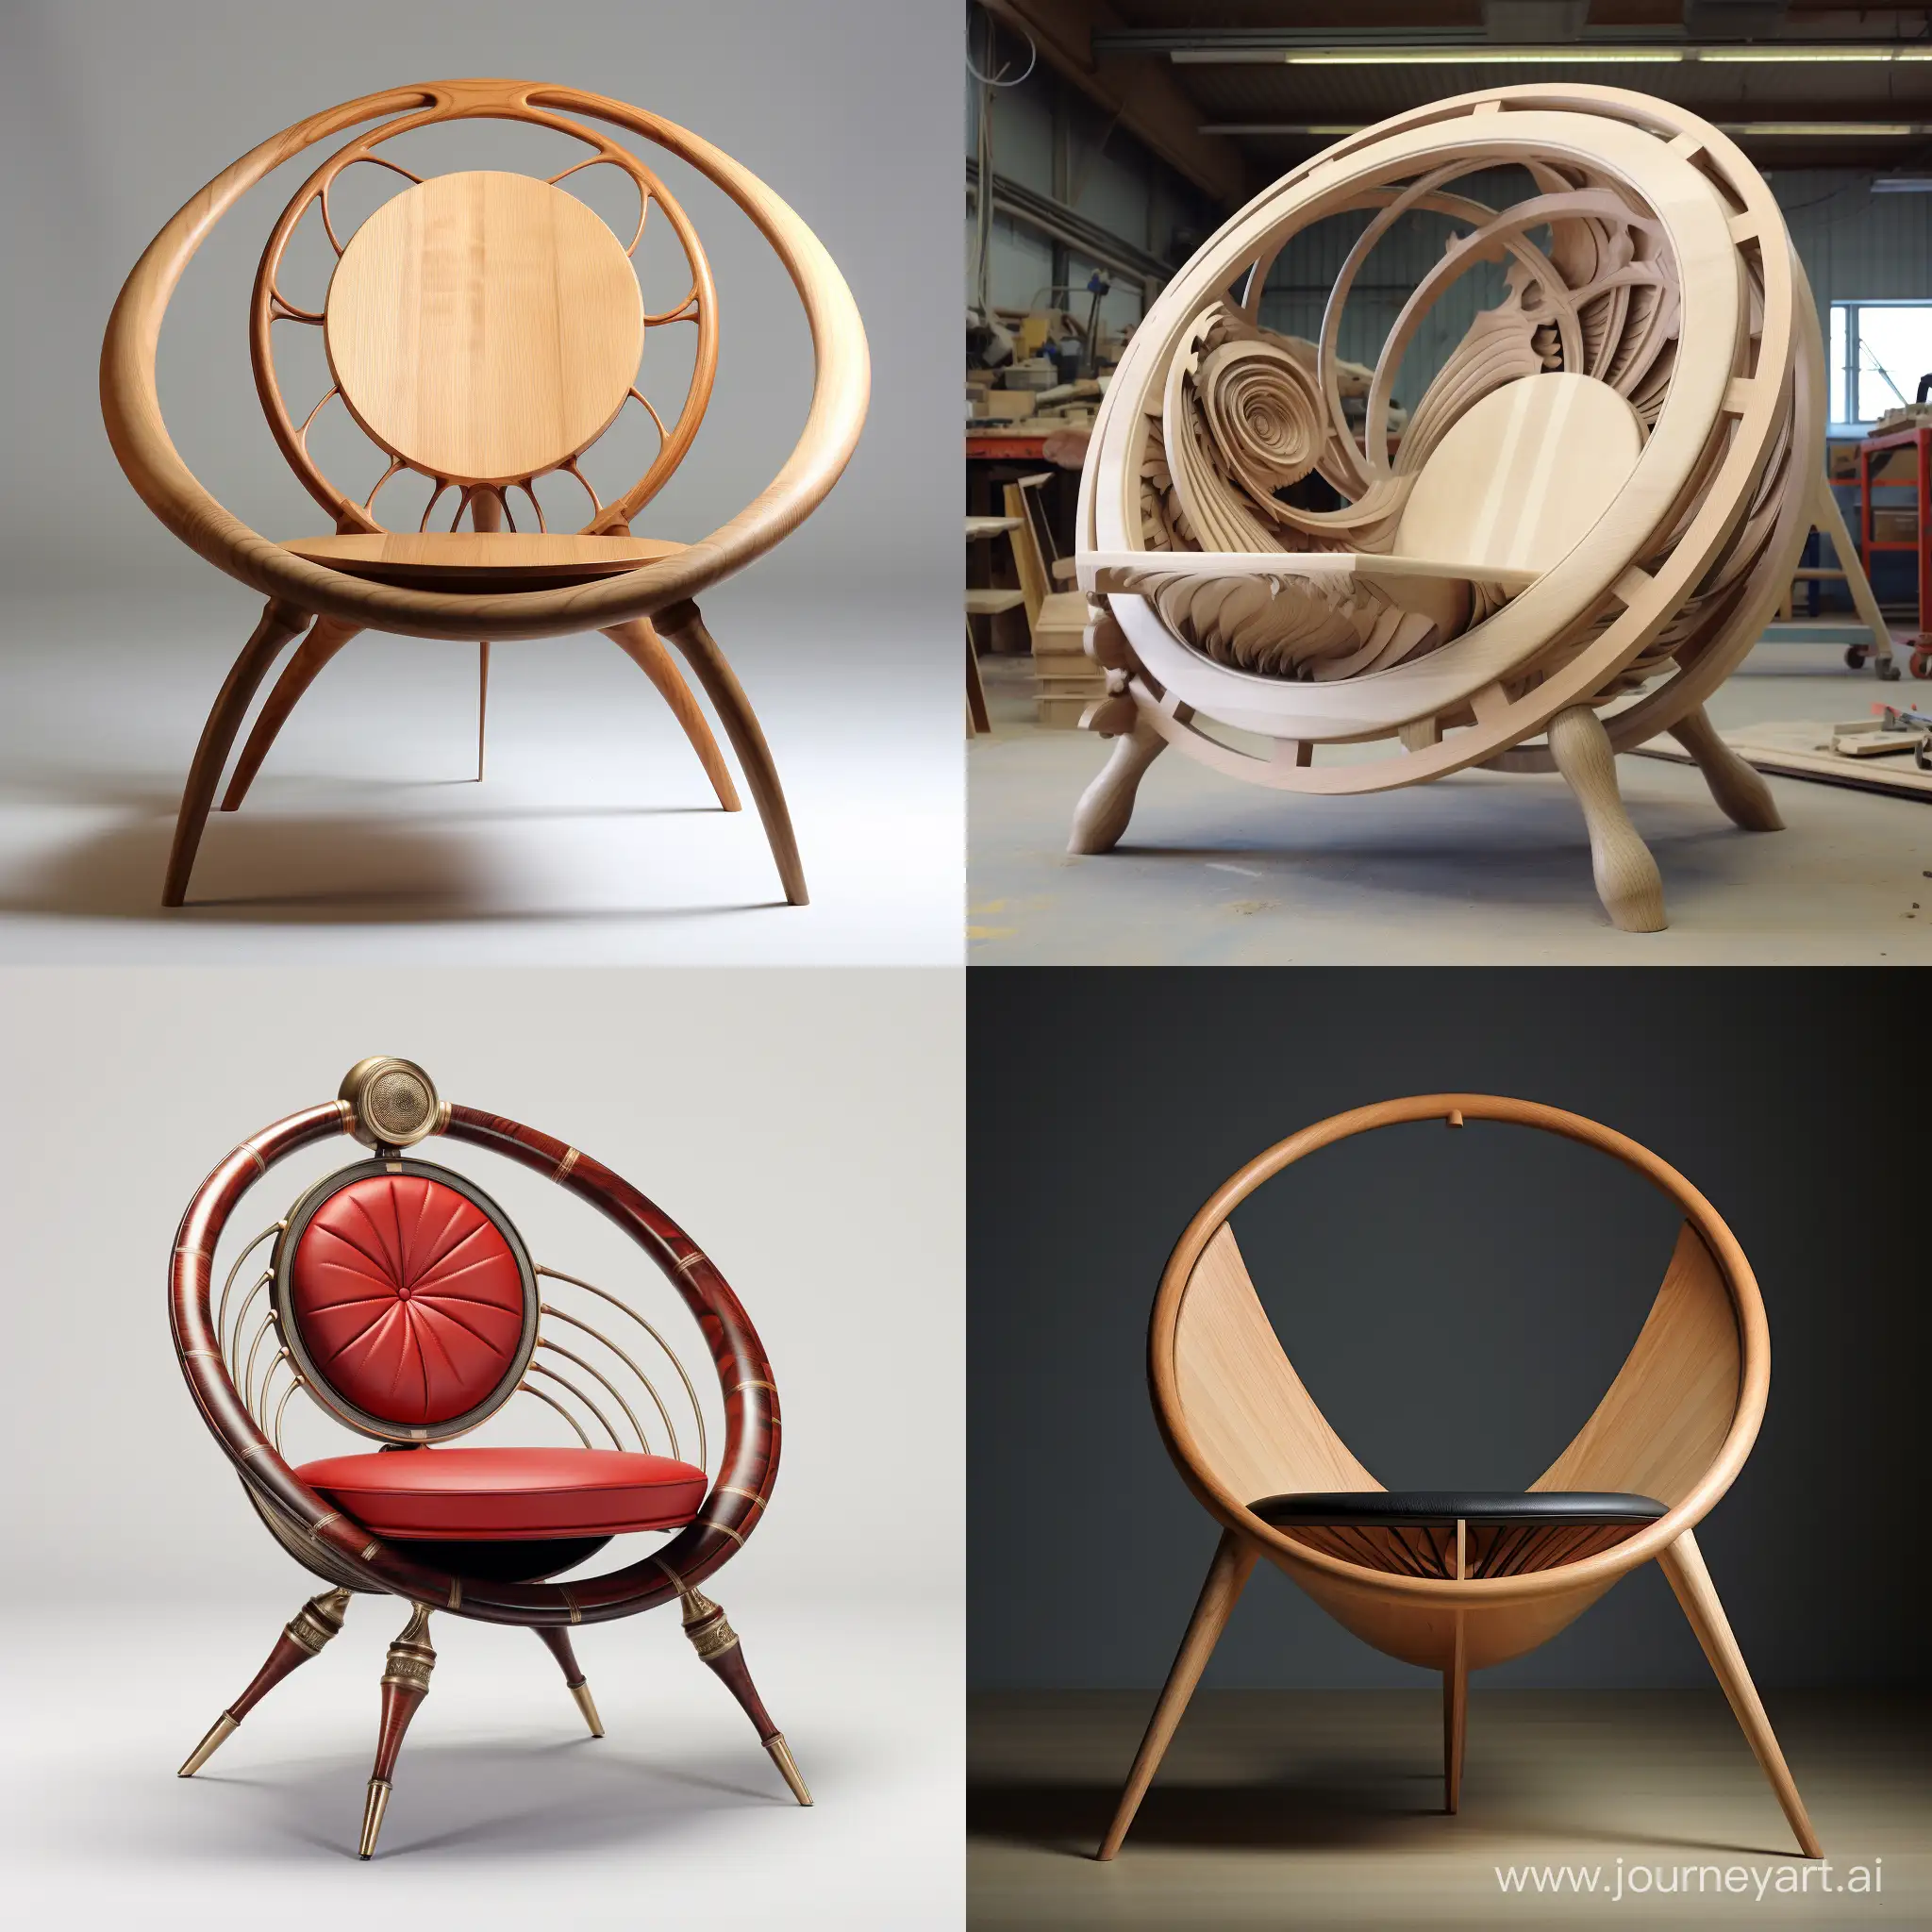 Contemporary-Nit-Chair-in-Round-Design-Artistic-11-Aspect-Ratio-38920